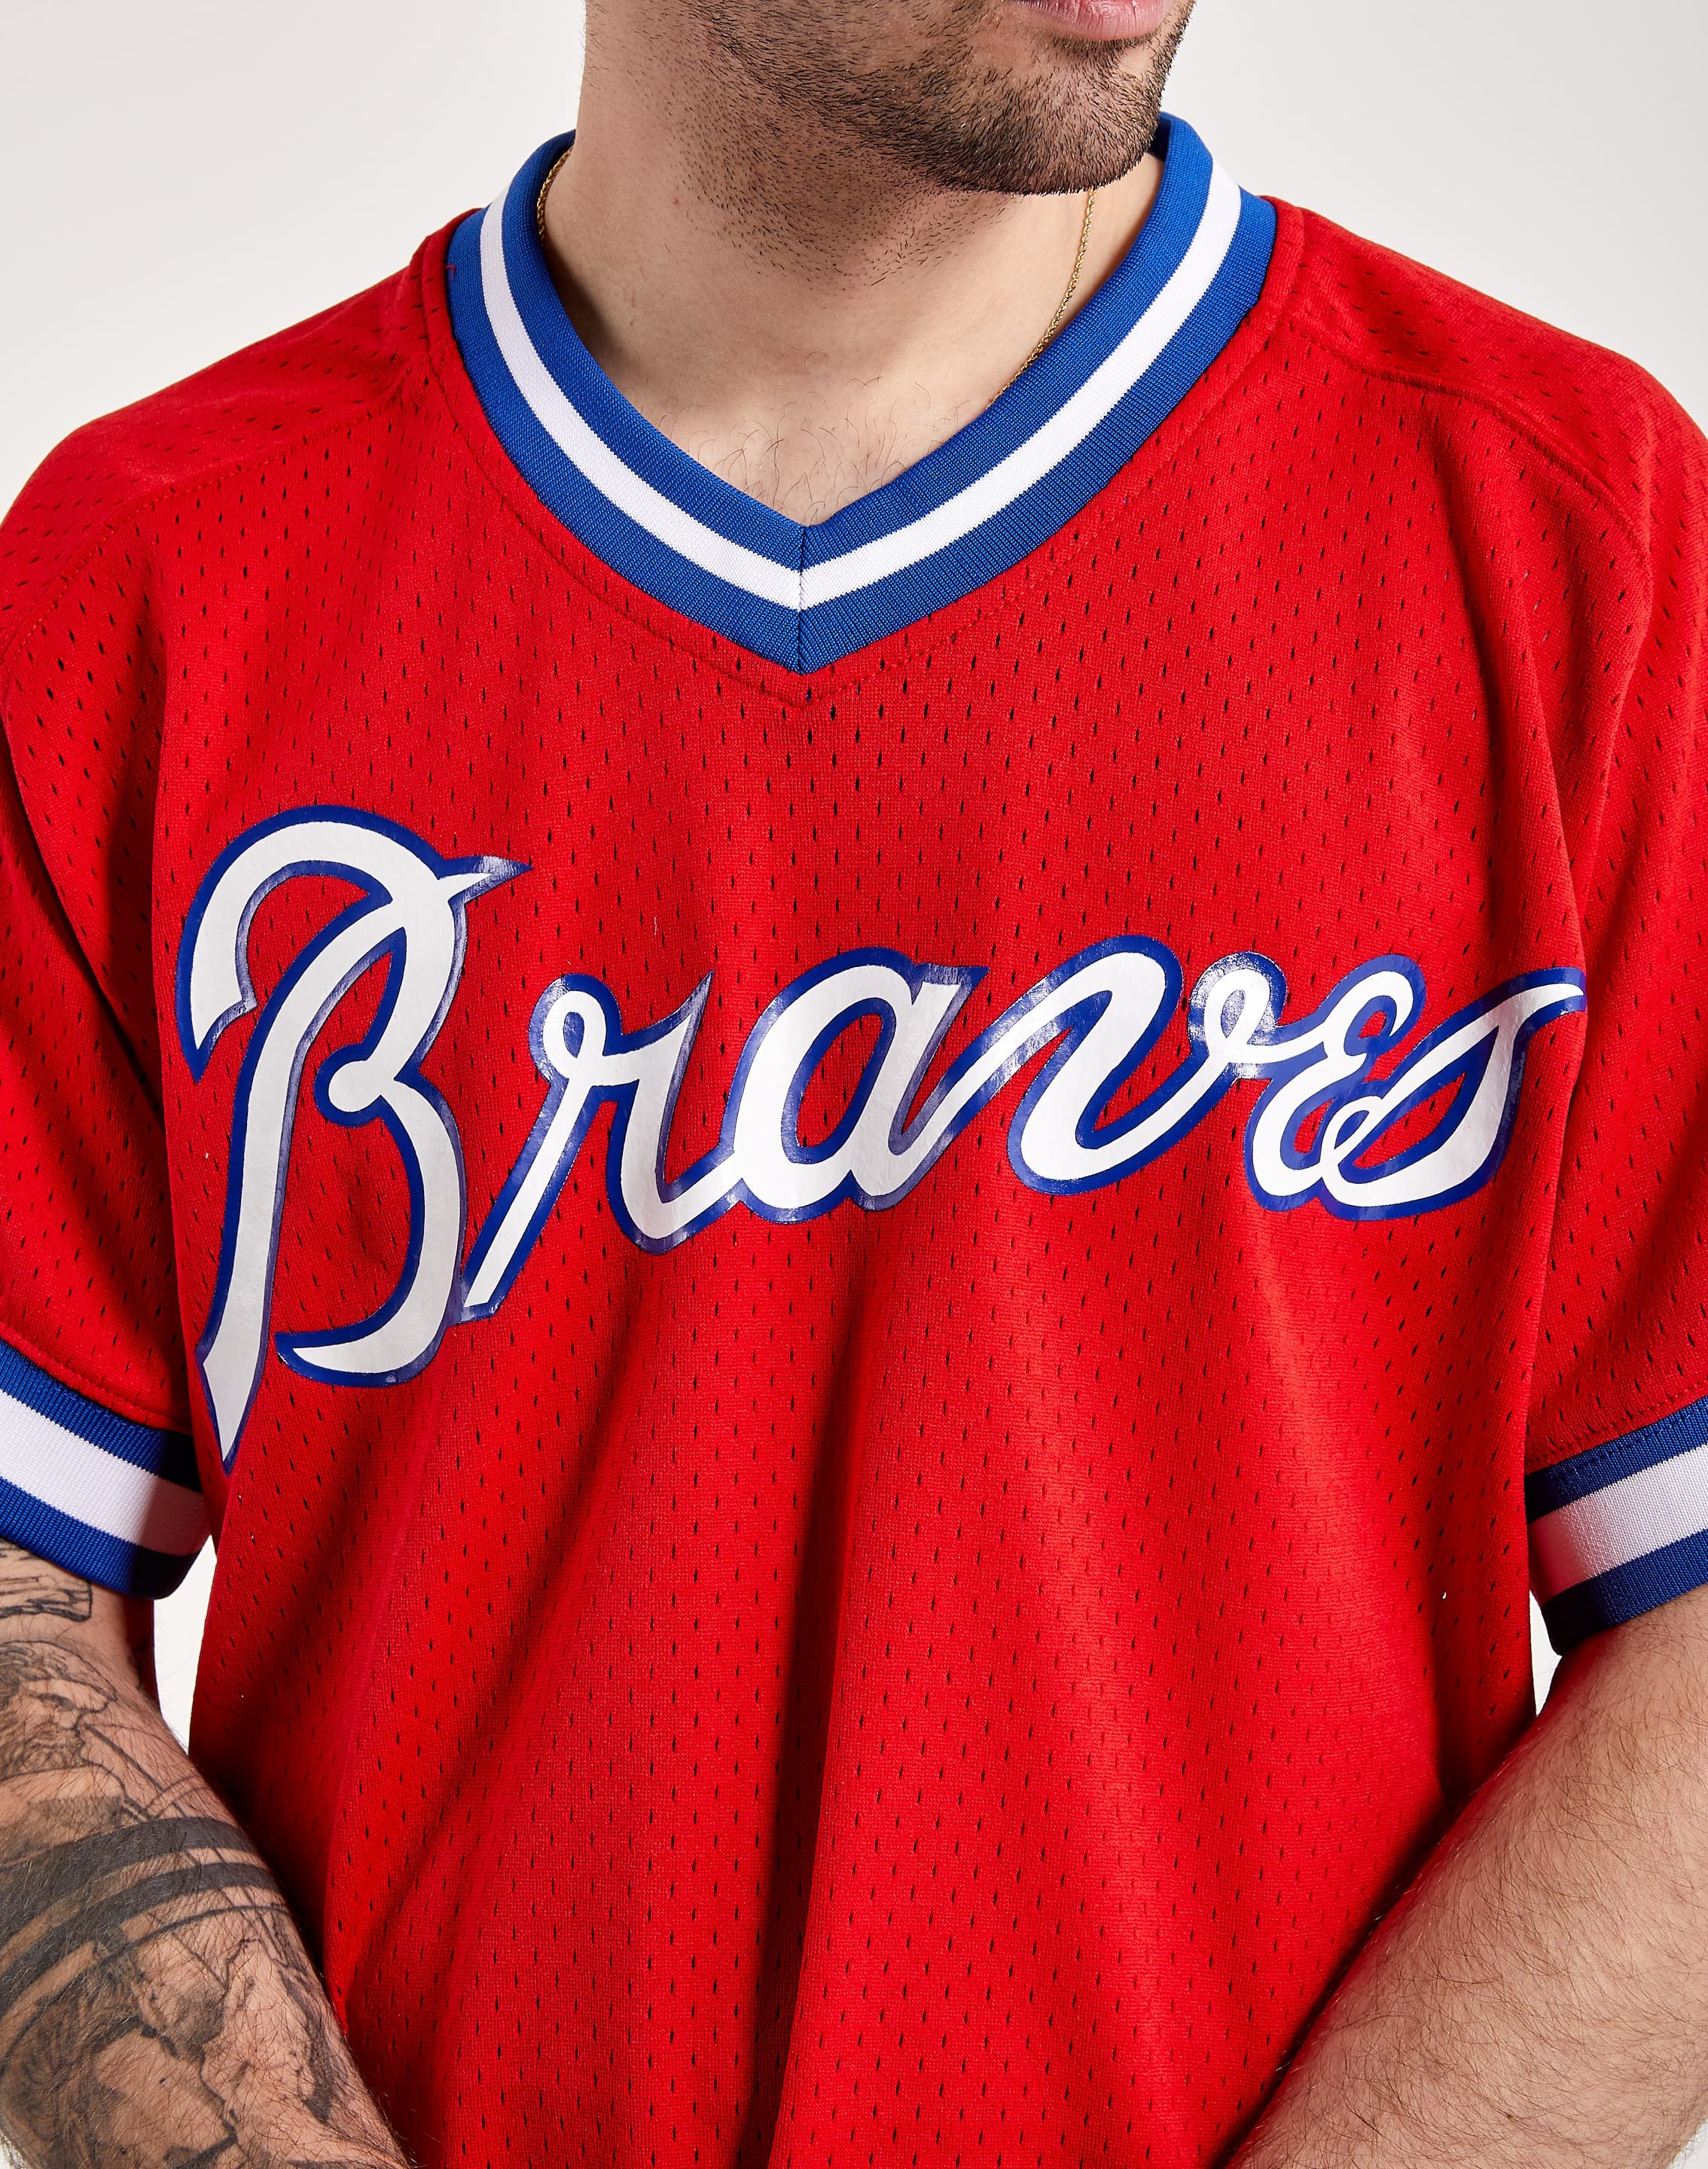 Official Atlanta Braves Gear, Braves Jerseys, Store, Braves Gifts